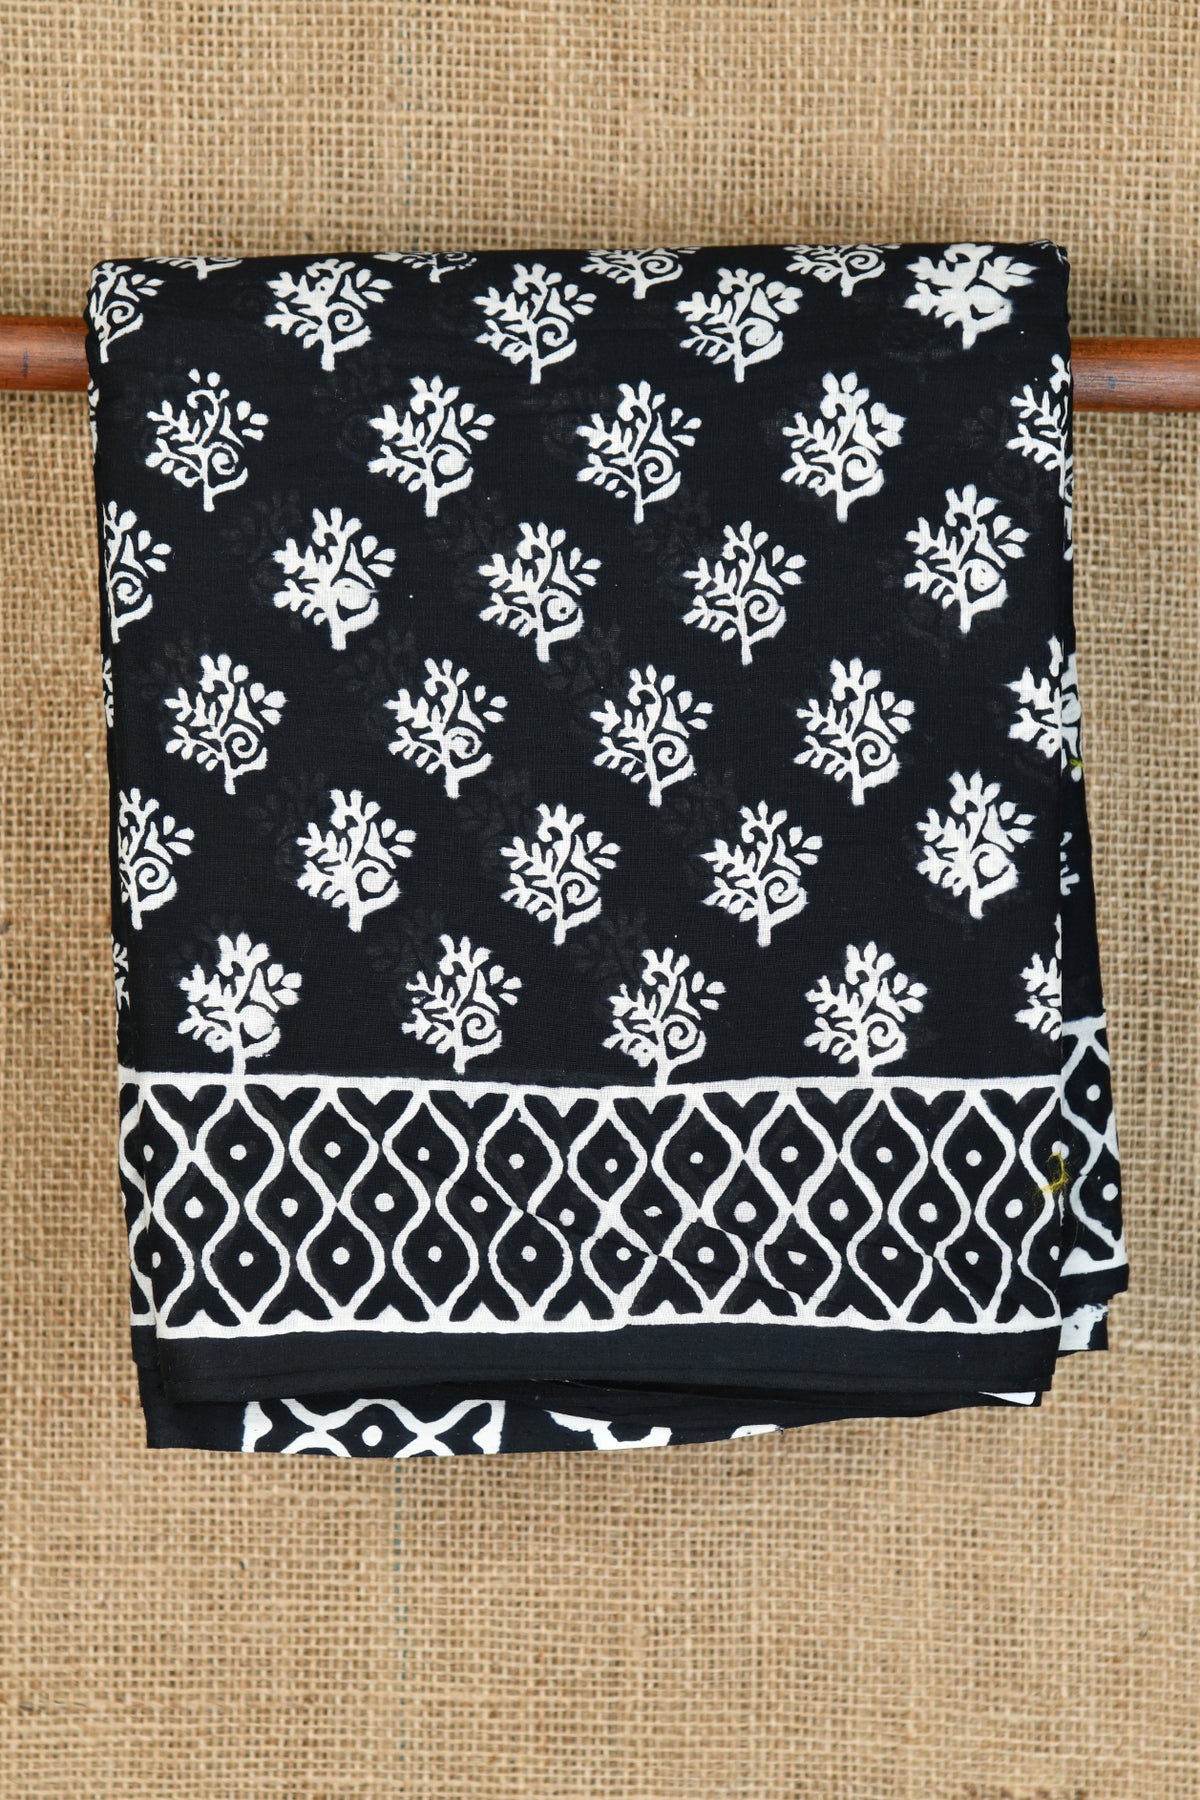 Floral Printed Black Jaipur Cotton Saree